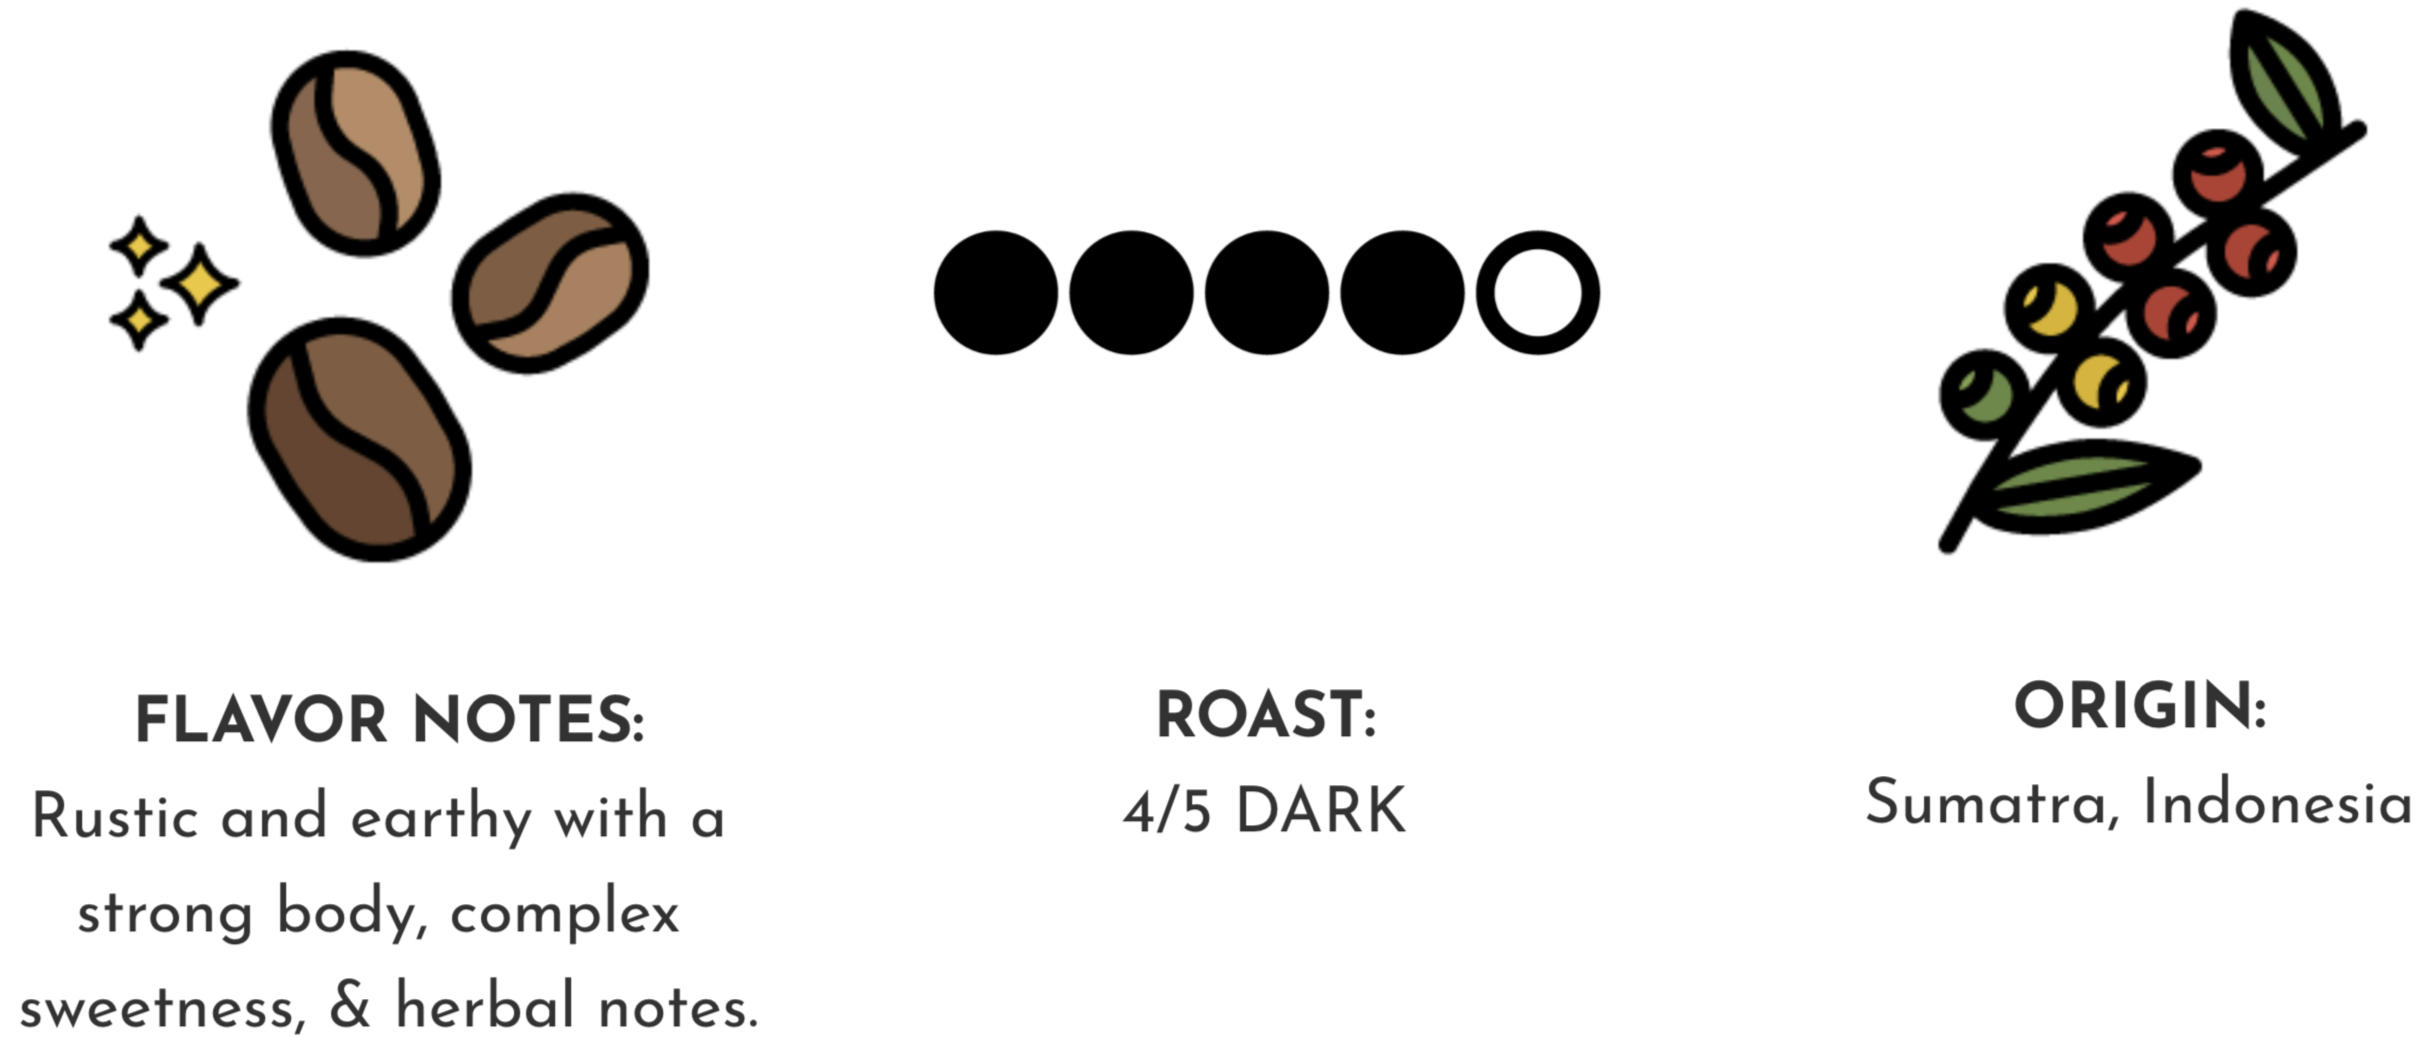 Angelinos Sumatra dark coffee profile in icons